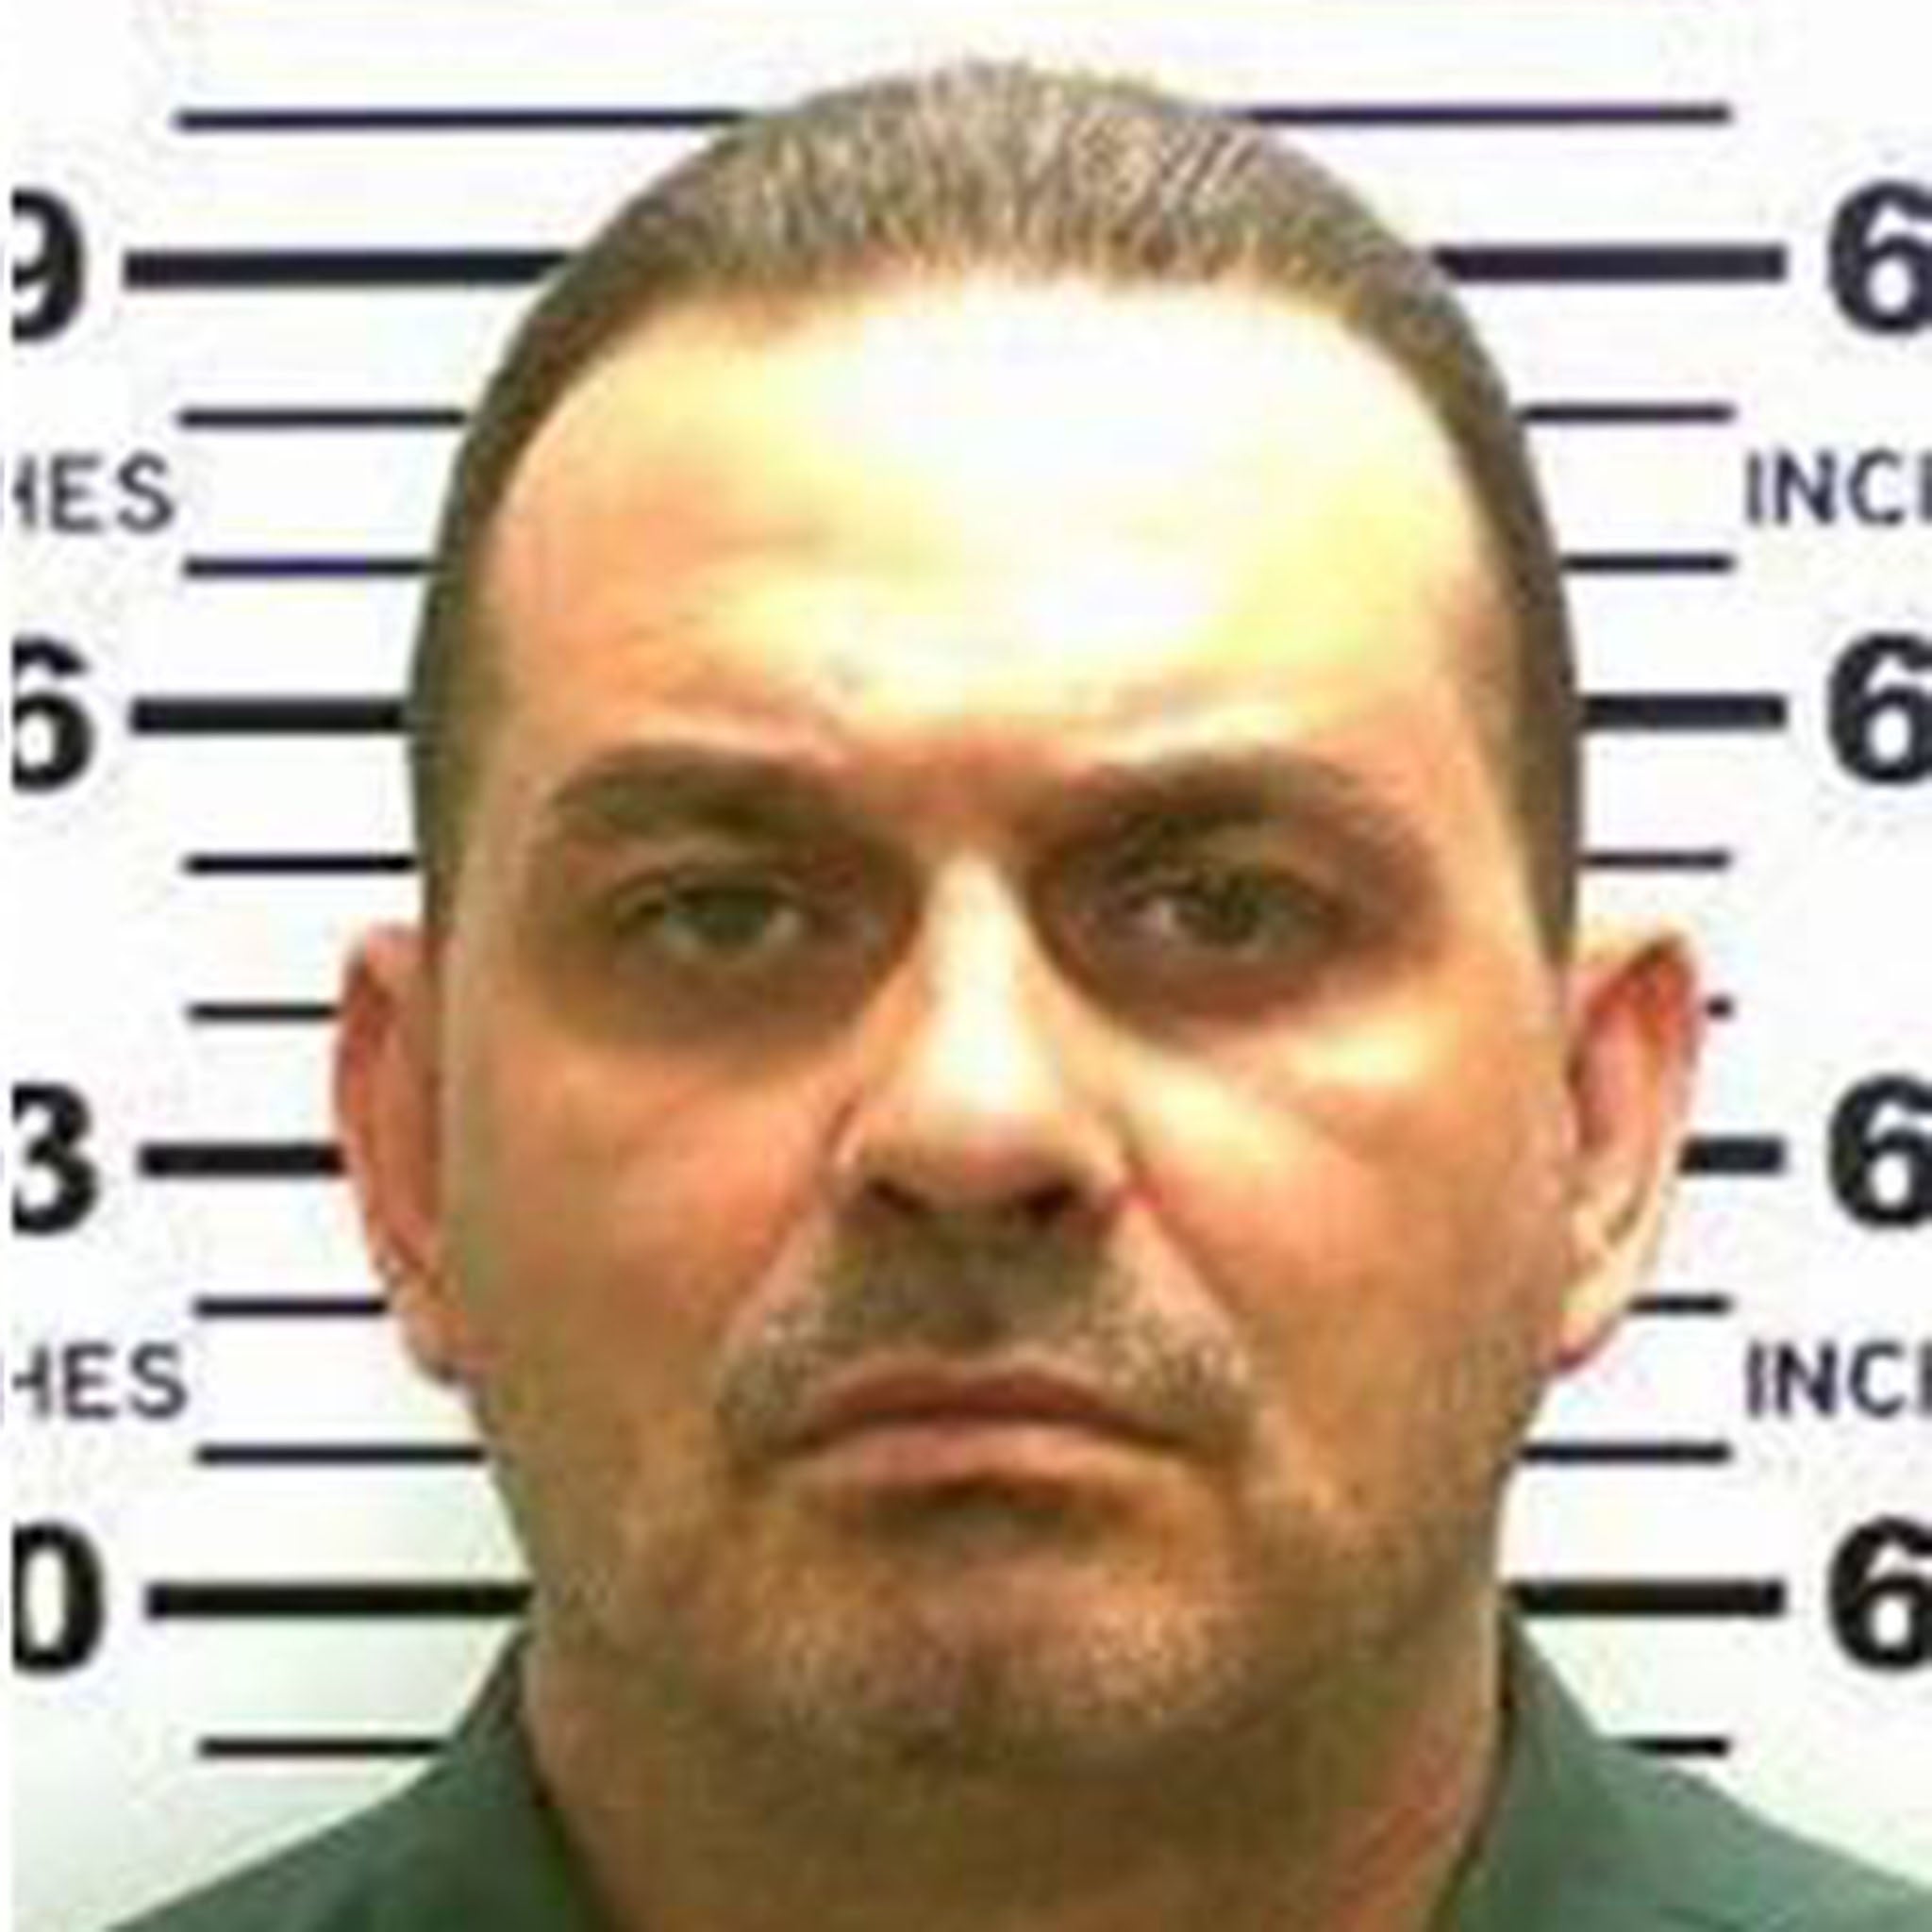 Richard Matt escaped from the Clinton Correctional Facility in Dannemora, New York